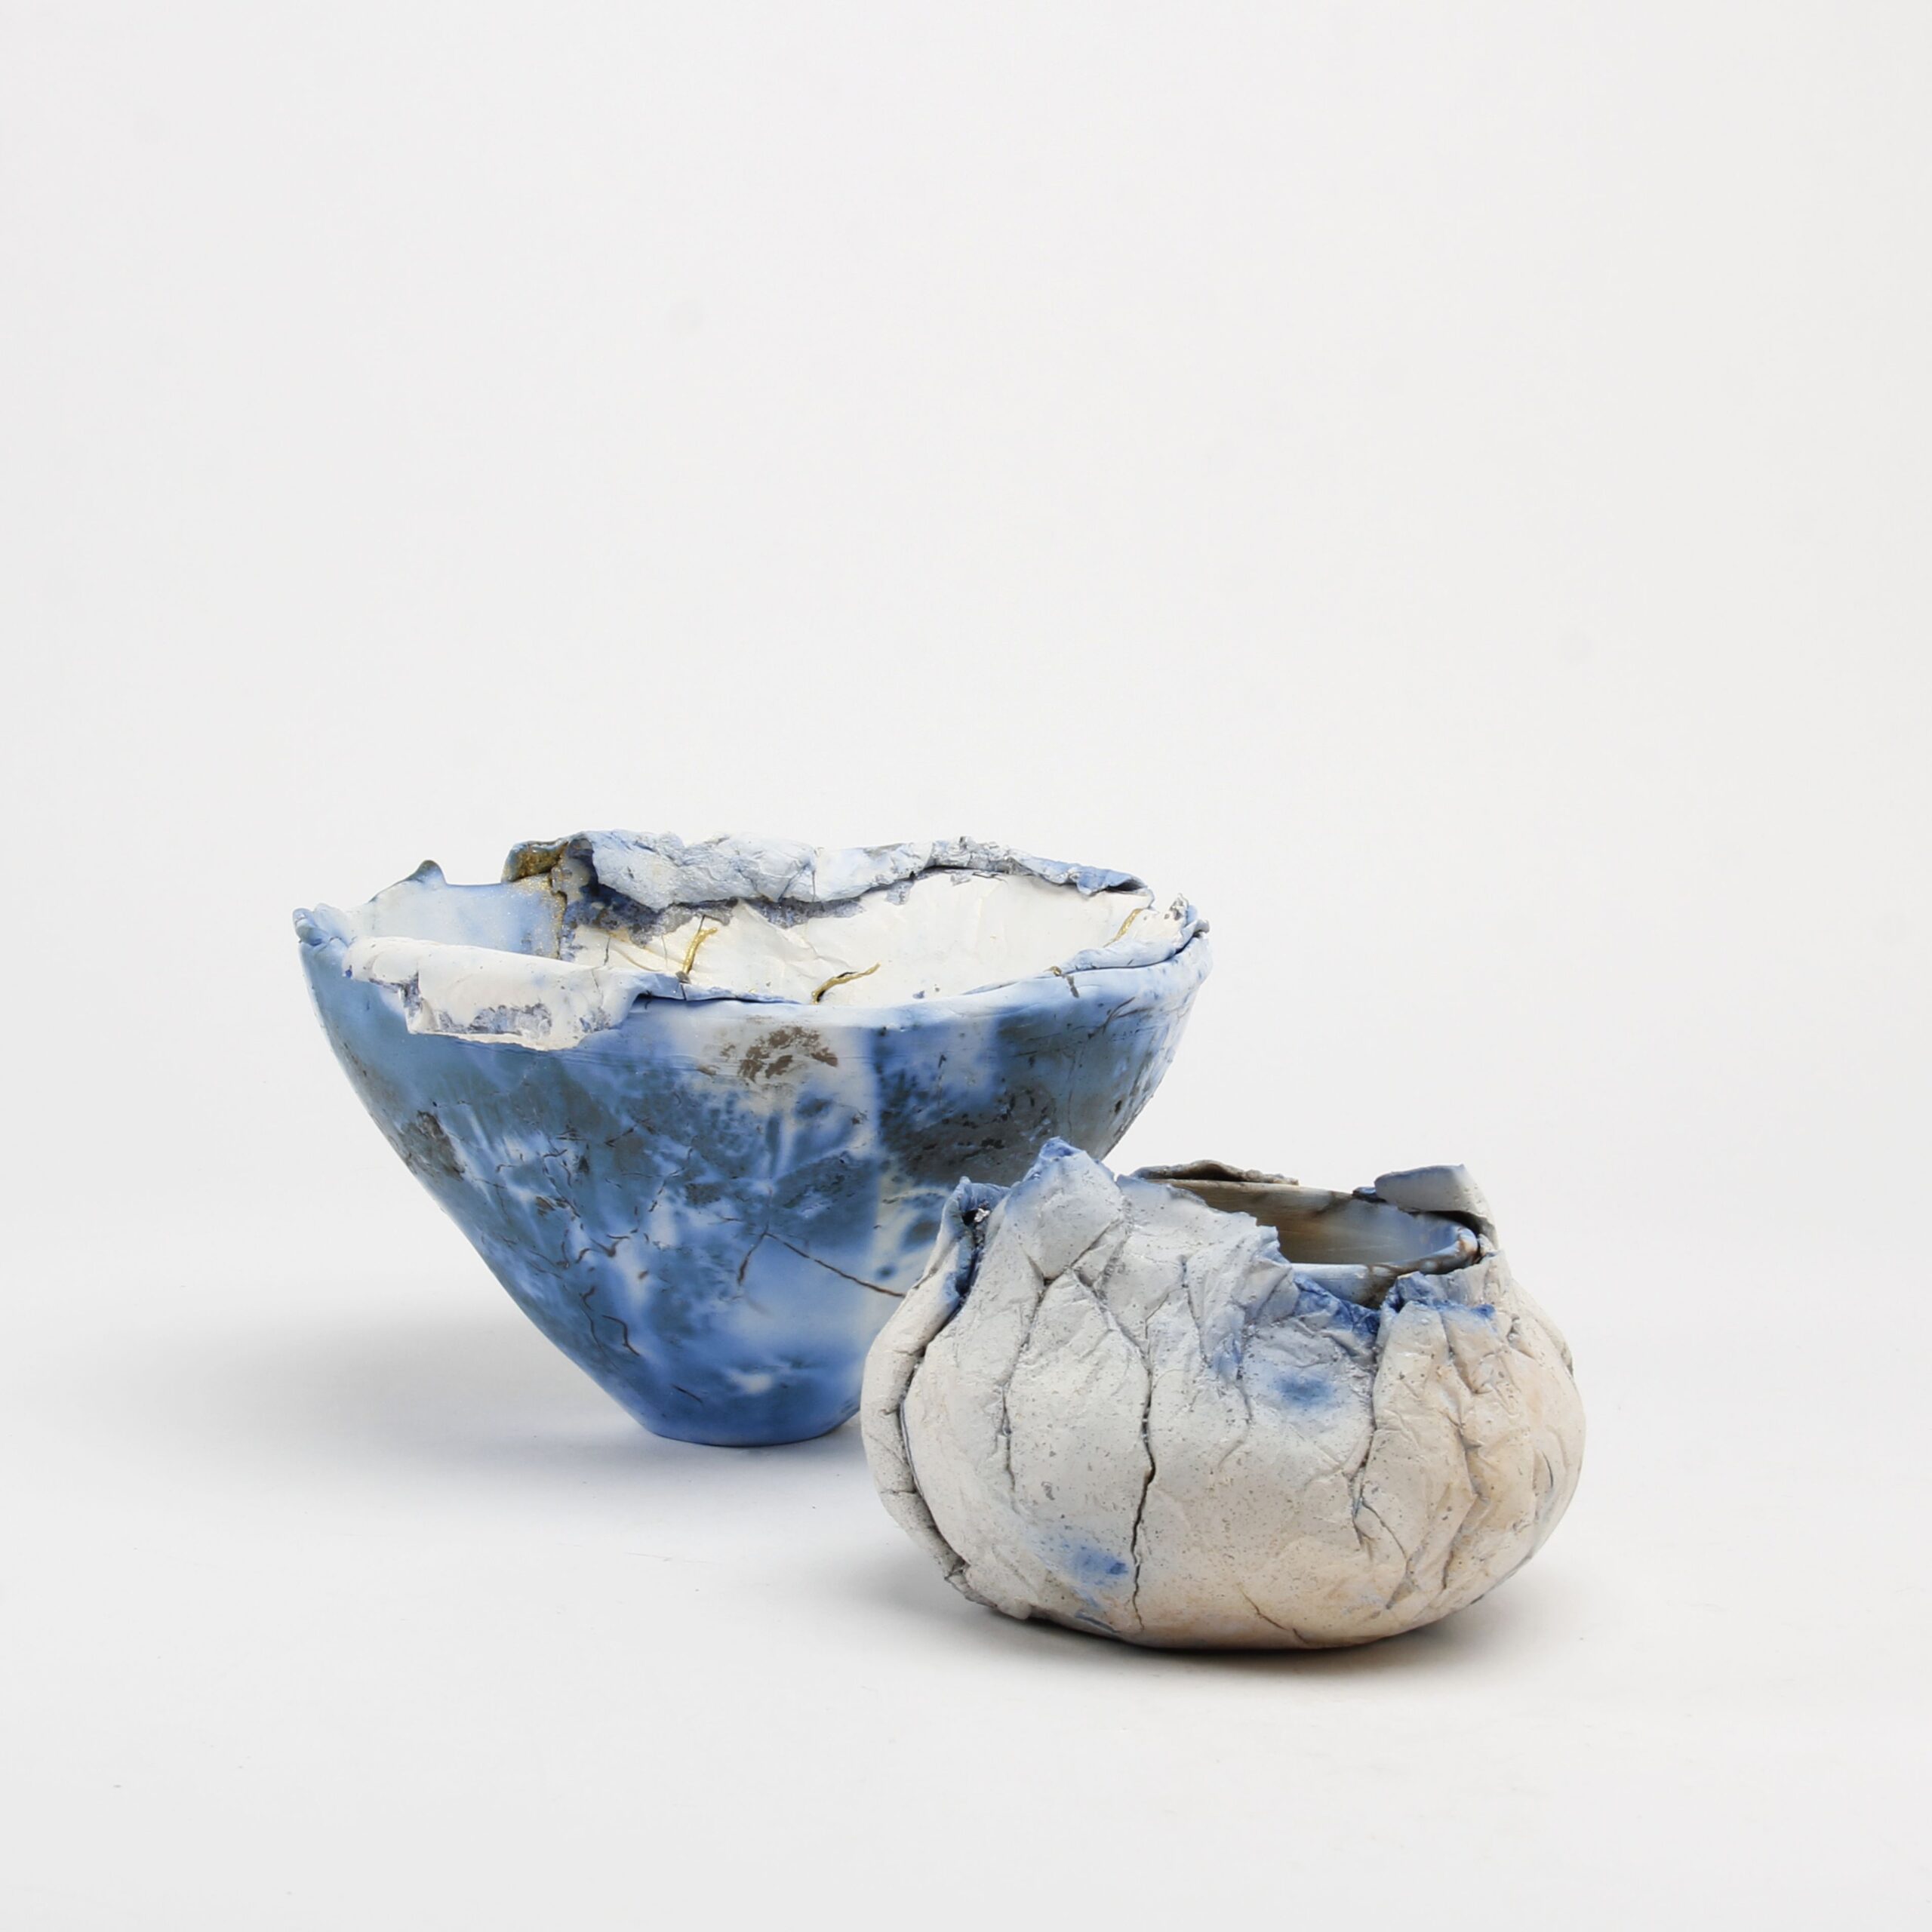 Alison Brannen: Medium Sculptural Bowl Product Image 3 of 3